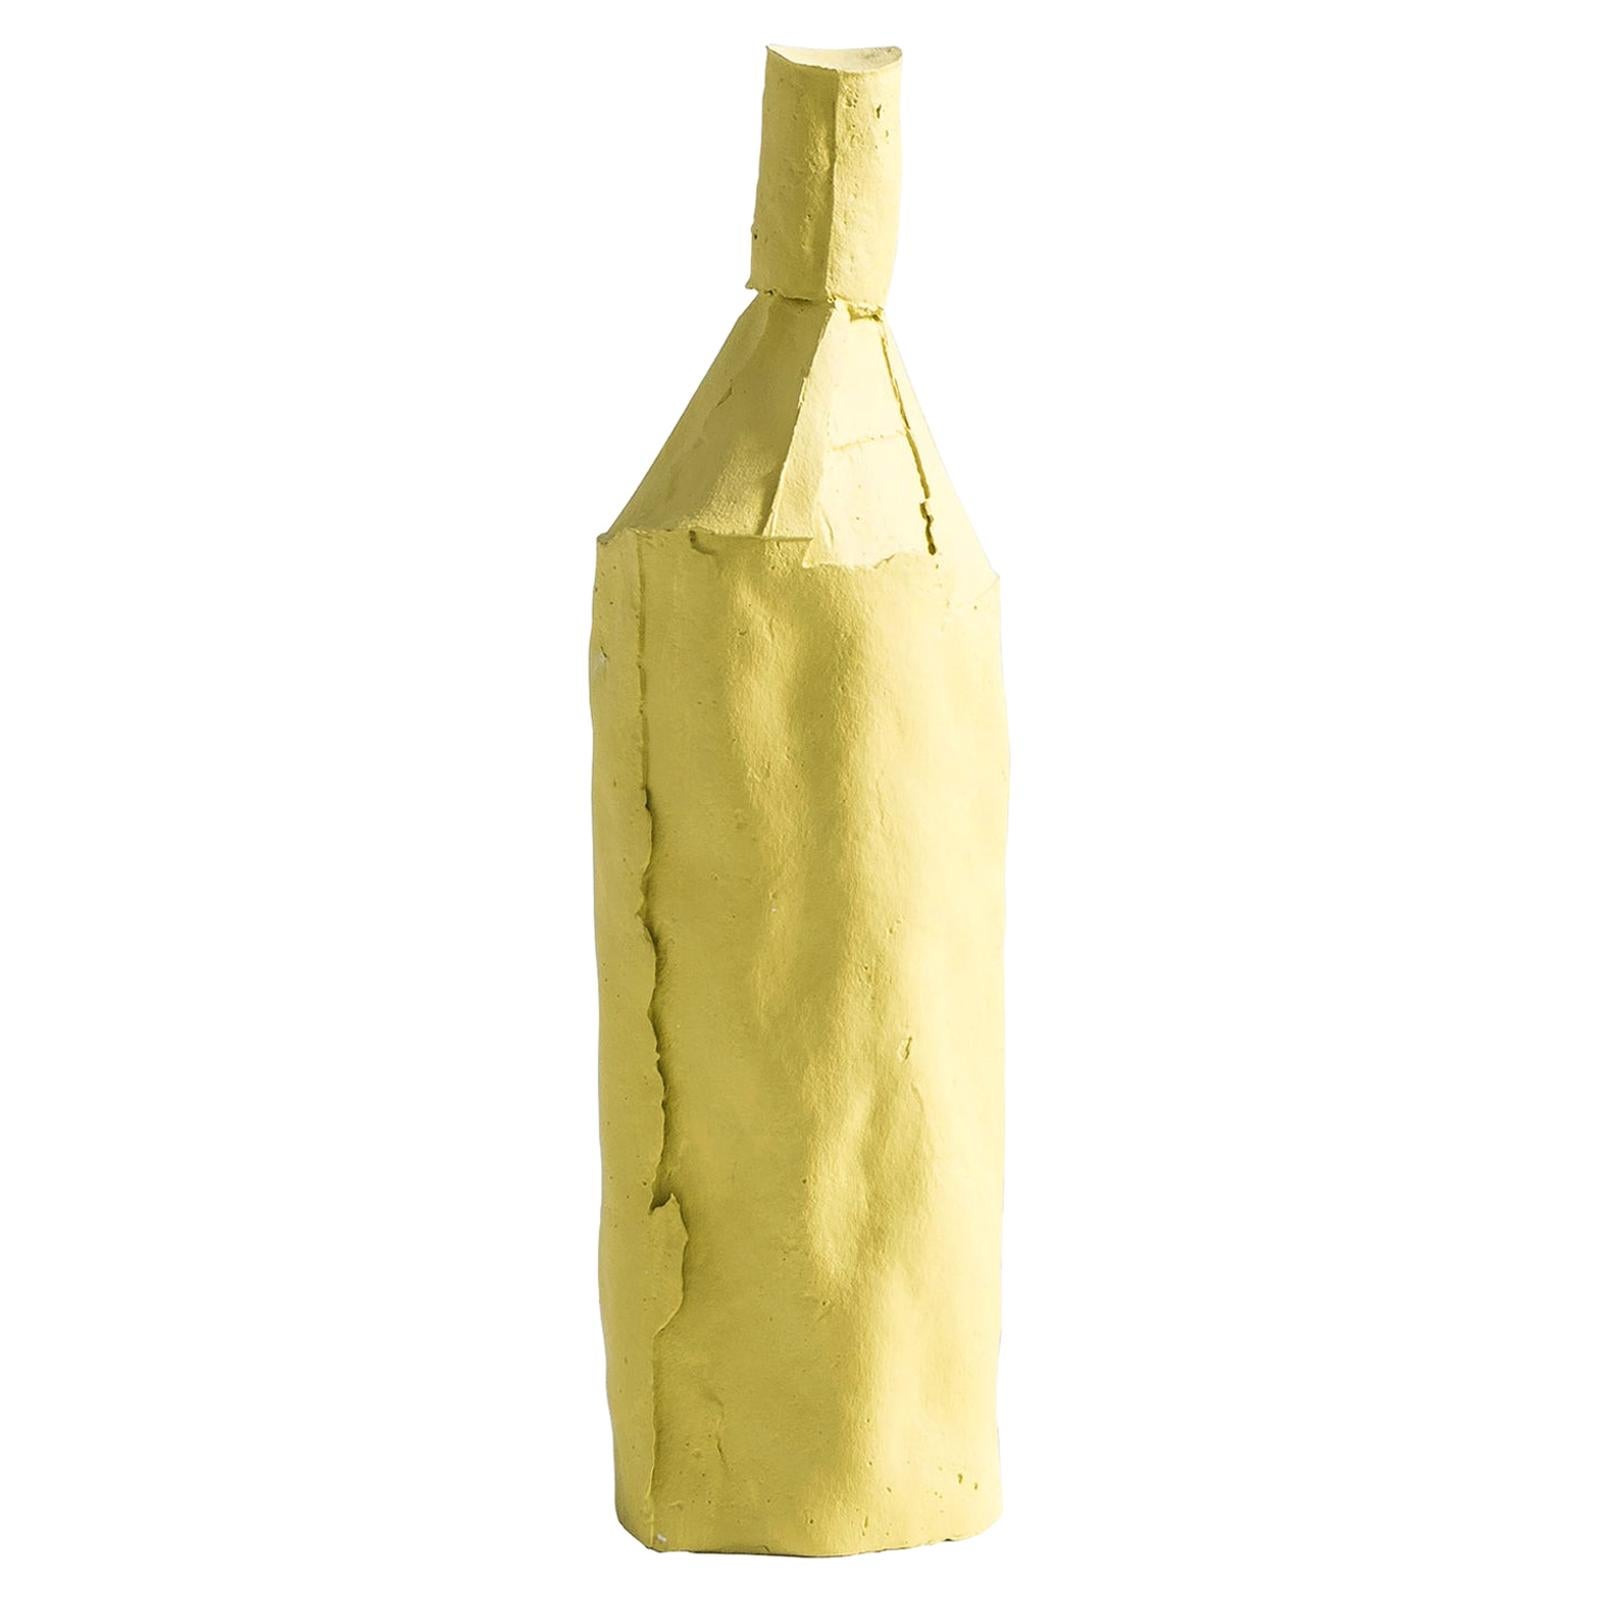 Contemporary Ceramic Cartocci Liscia Texture Yellow Decorative Bottle For Sale